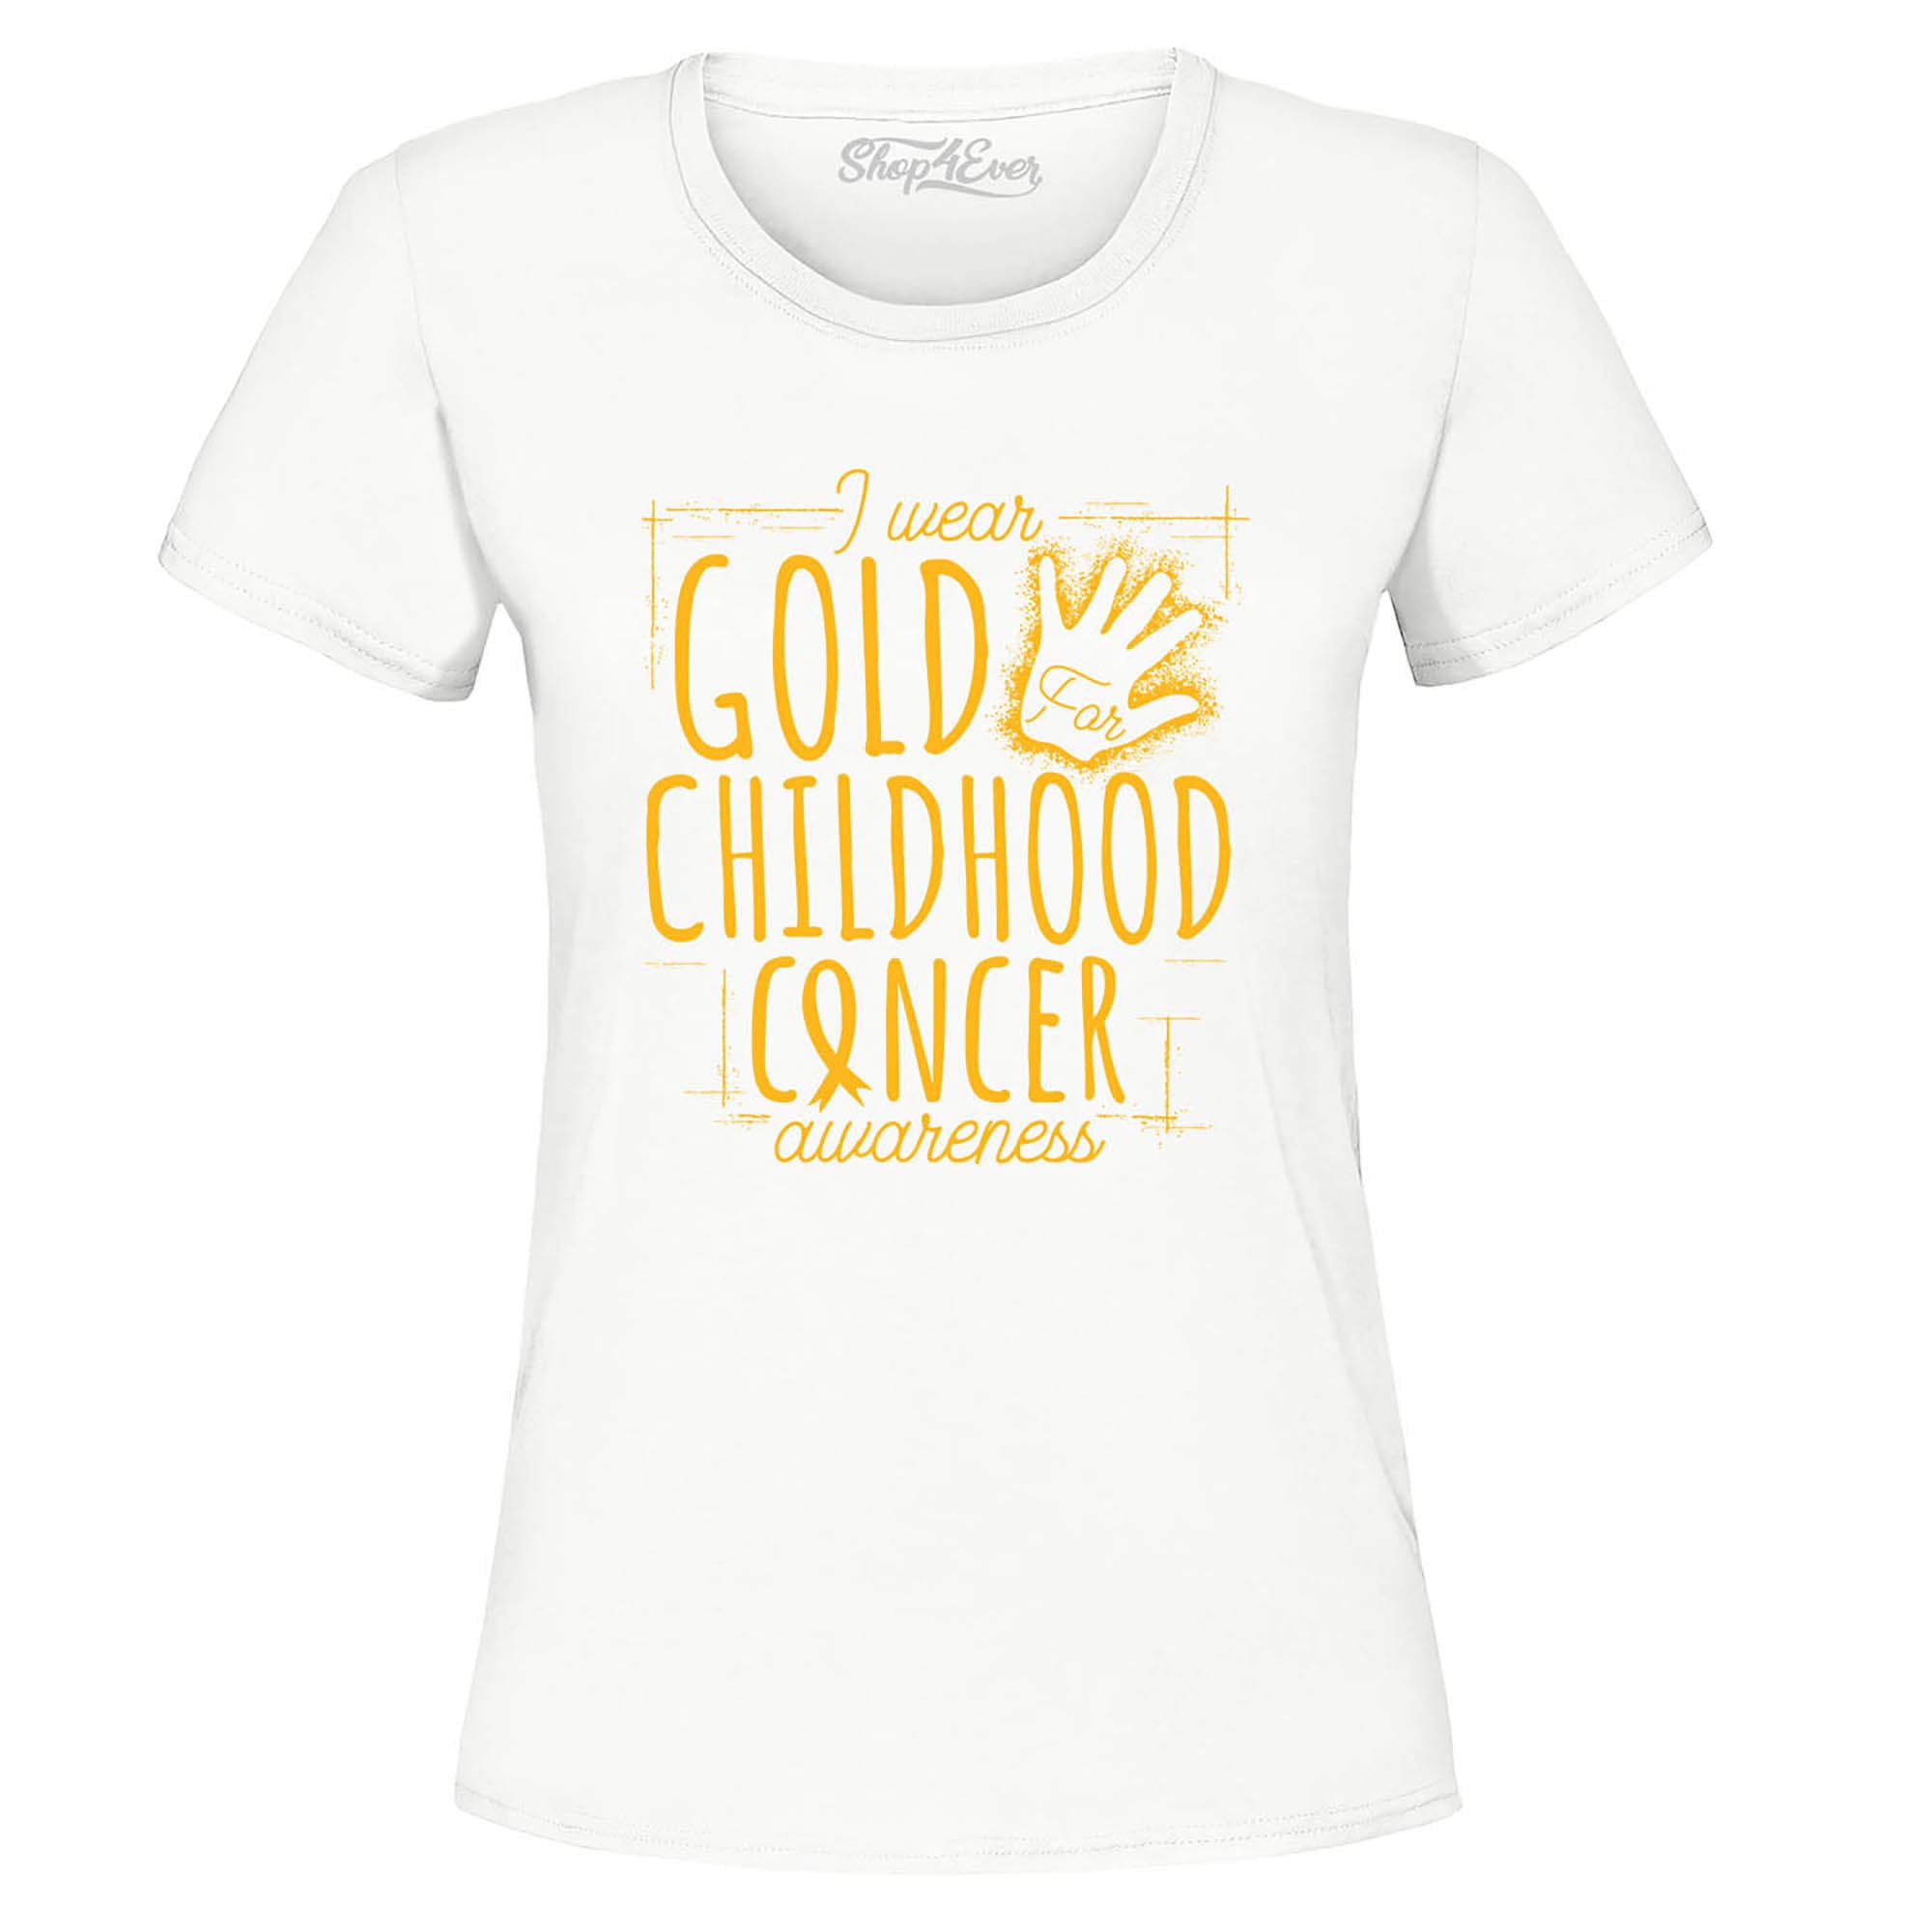 I Wear Gold for Childhood Cancer Awareness Women's T-Shirt